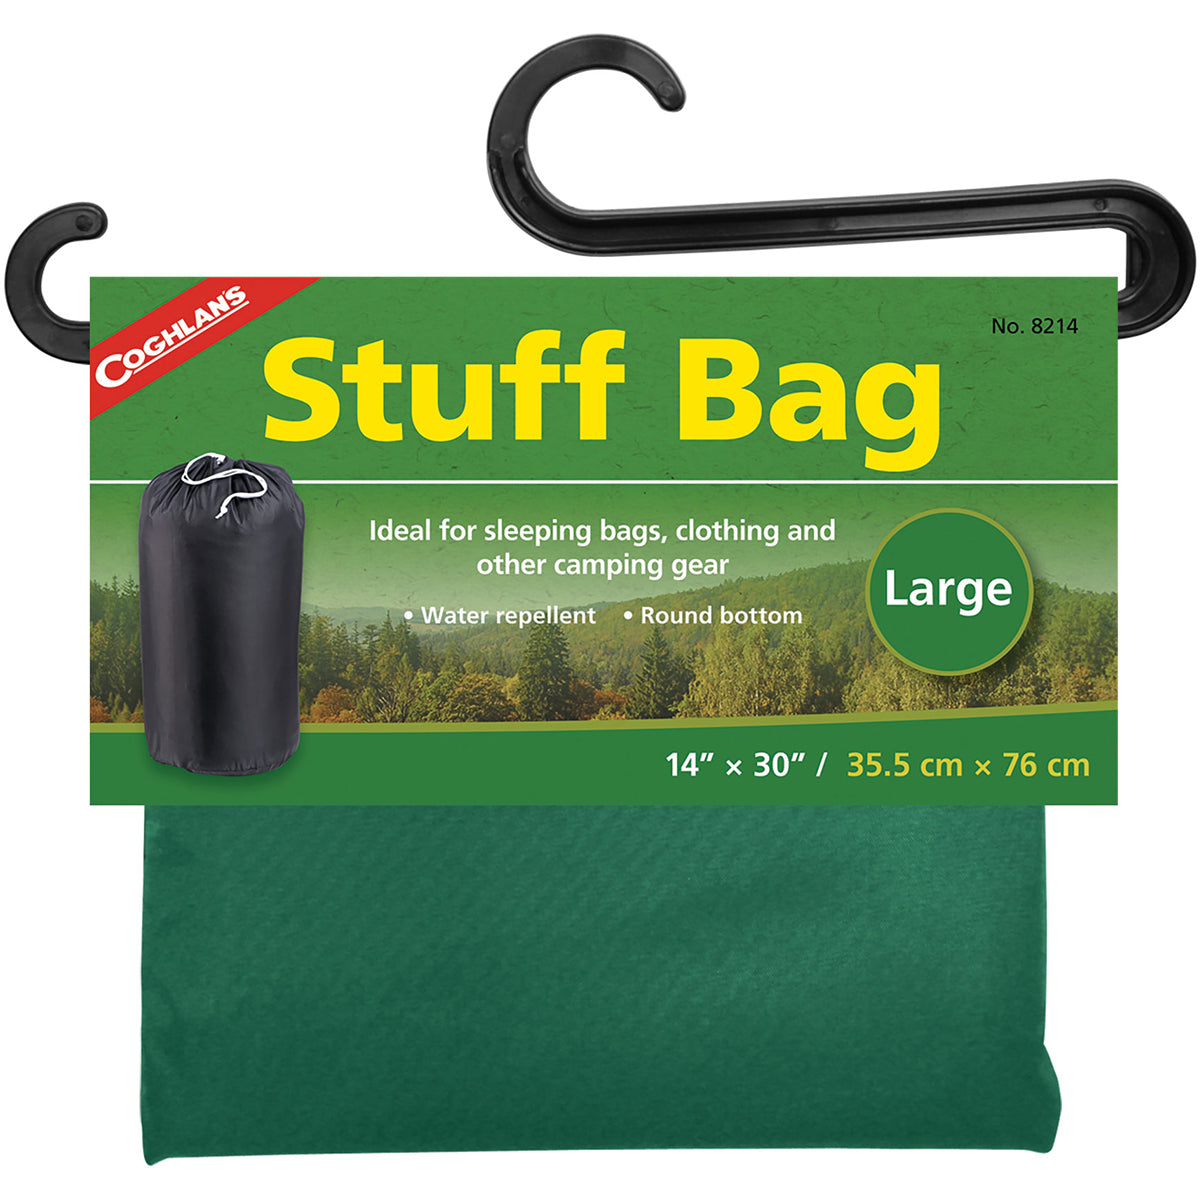 Coghlan's Stuff Bag, 14" x 30", Sack Pouch Sleeping Camping Clothing Storage Coghlan's